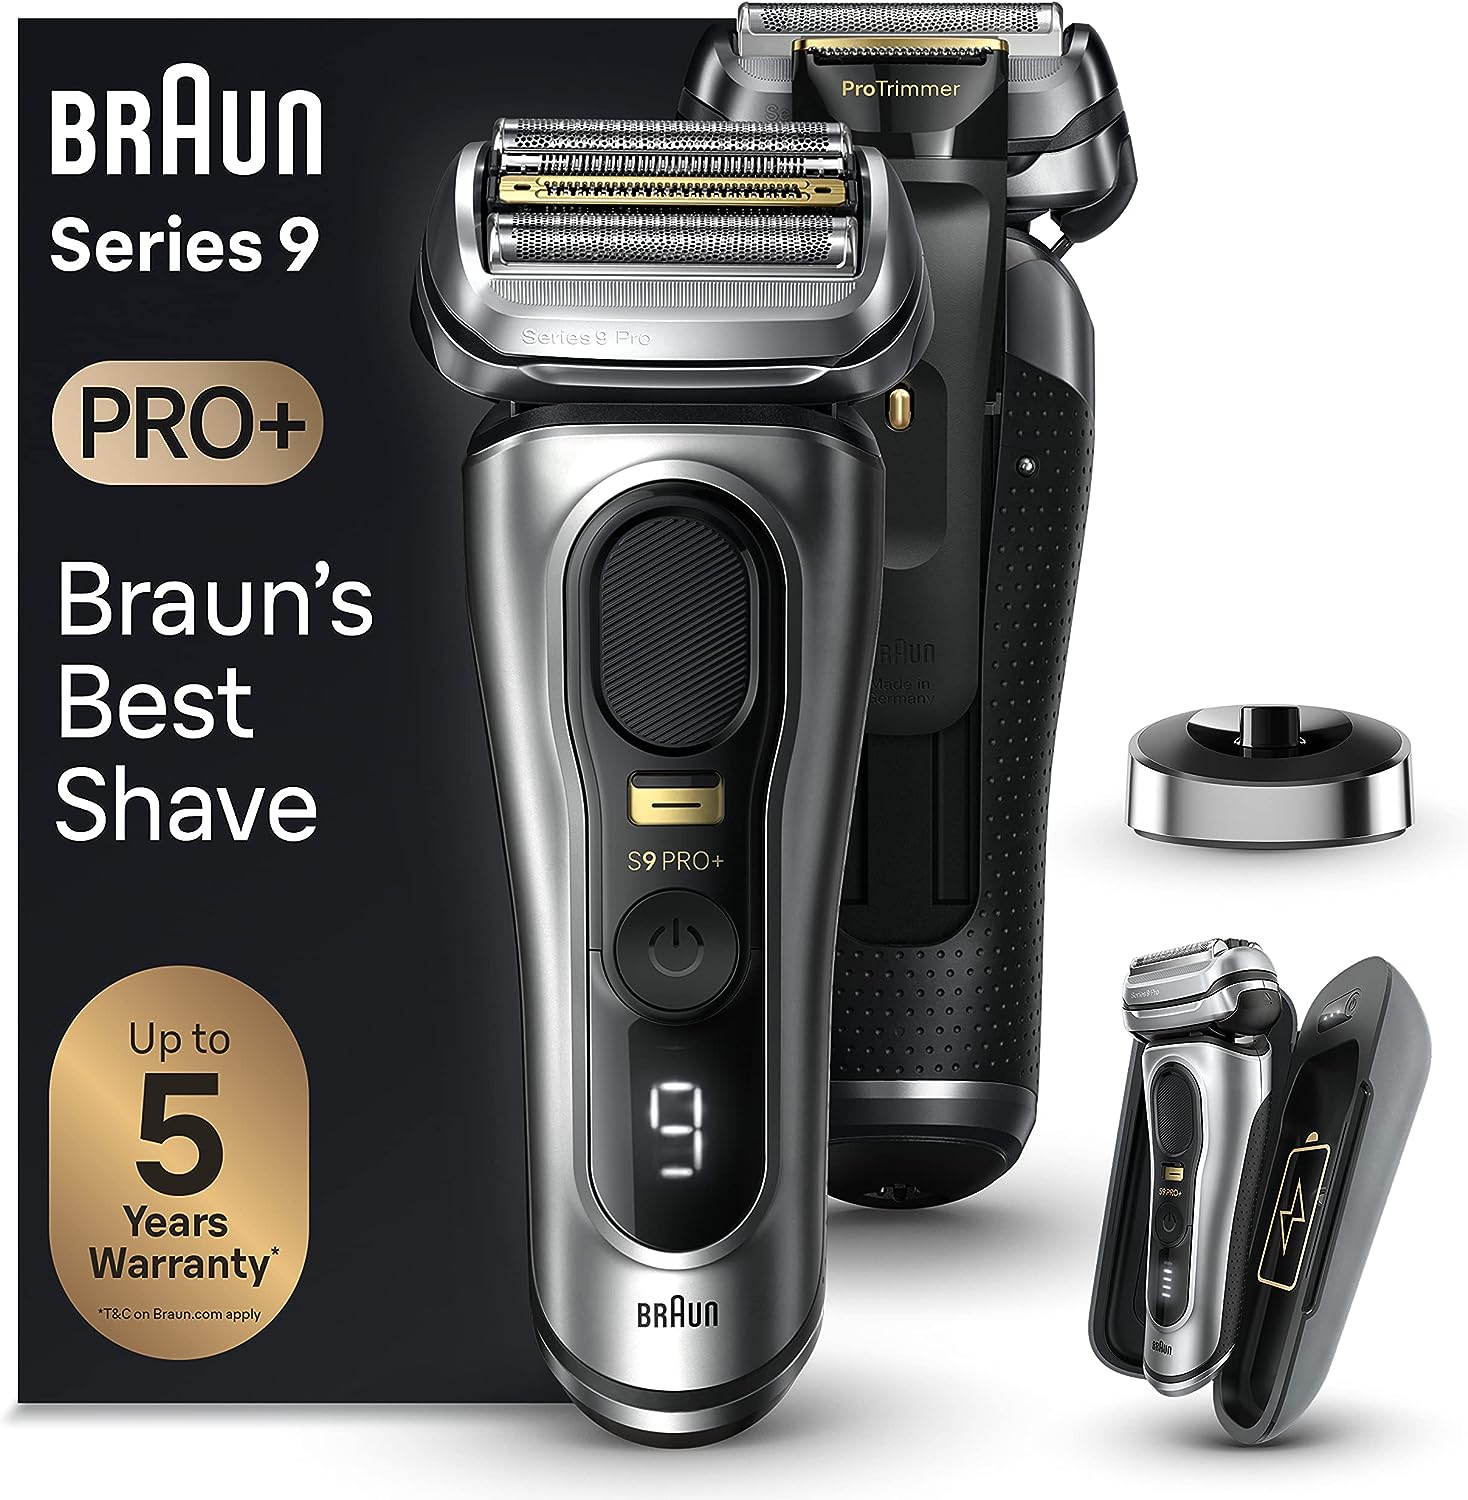 Braun Series 9 Pro Plus versus Braun Series 9 versus Braun Series 9 Pro